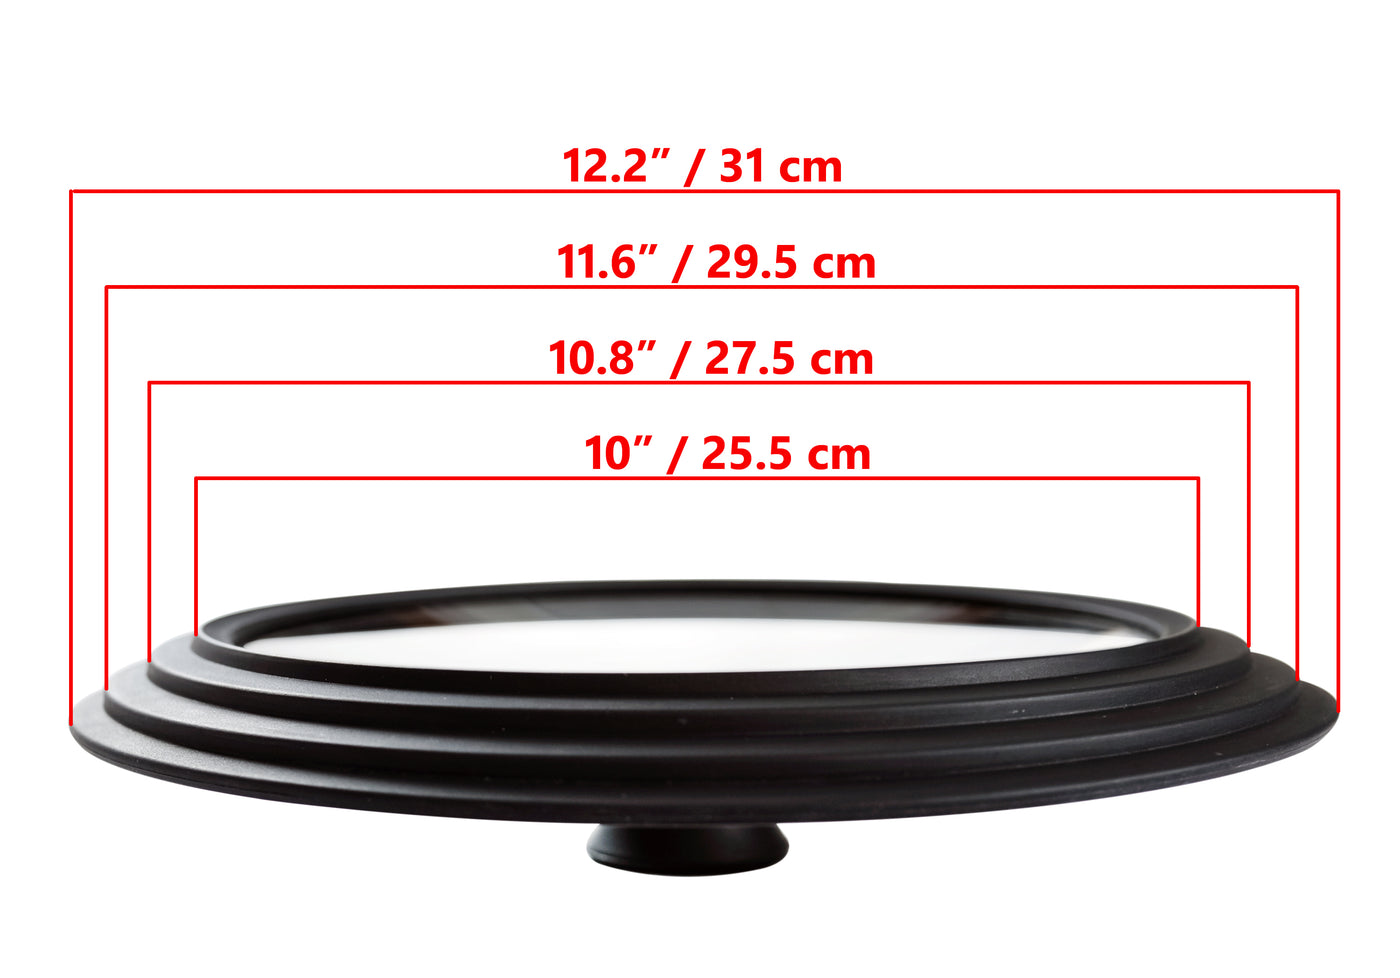 Glass Lid Universal - Multisize, Outer Edges 12.2” / 31 cm Diameter, for Pots and Pans, Black